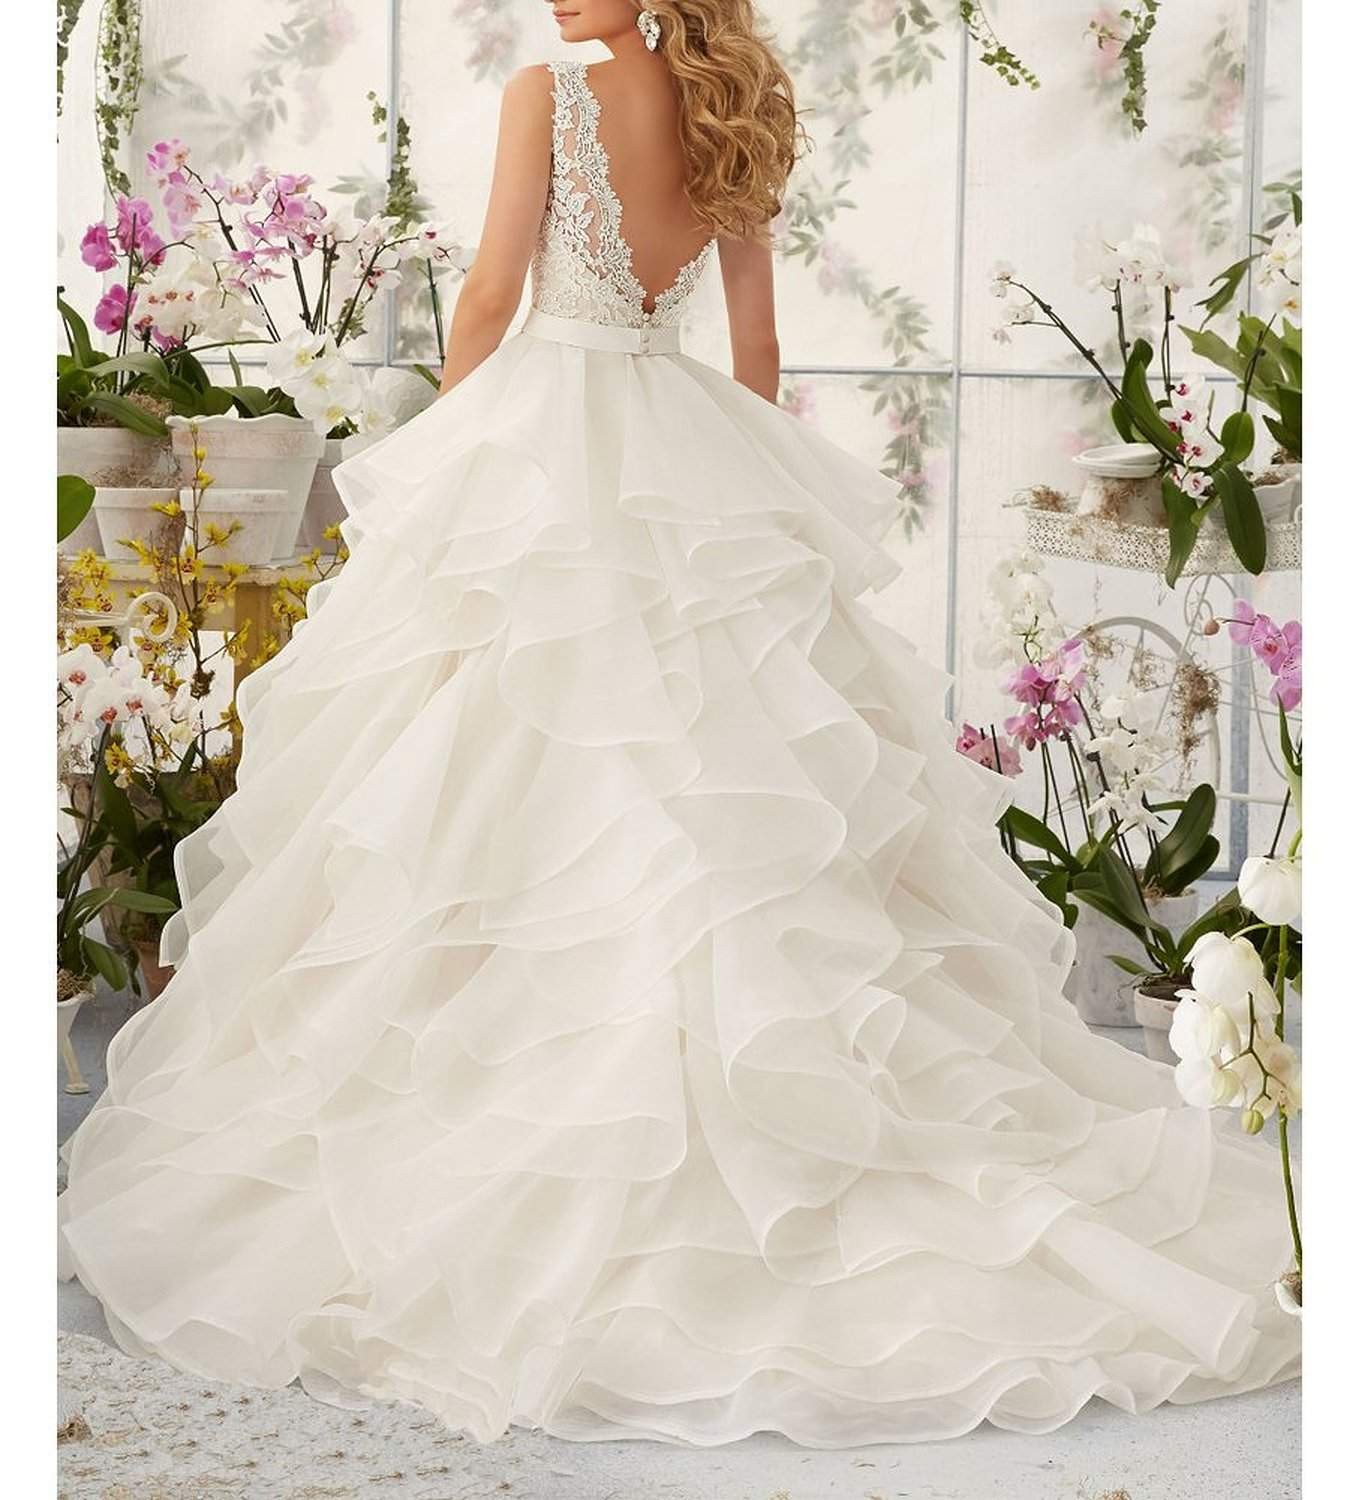 Cheap Simple Wedding Dresses
 Top 50 Best Cheap Wedding Dresses pare Buy & Save